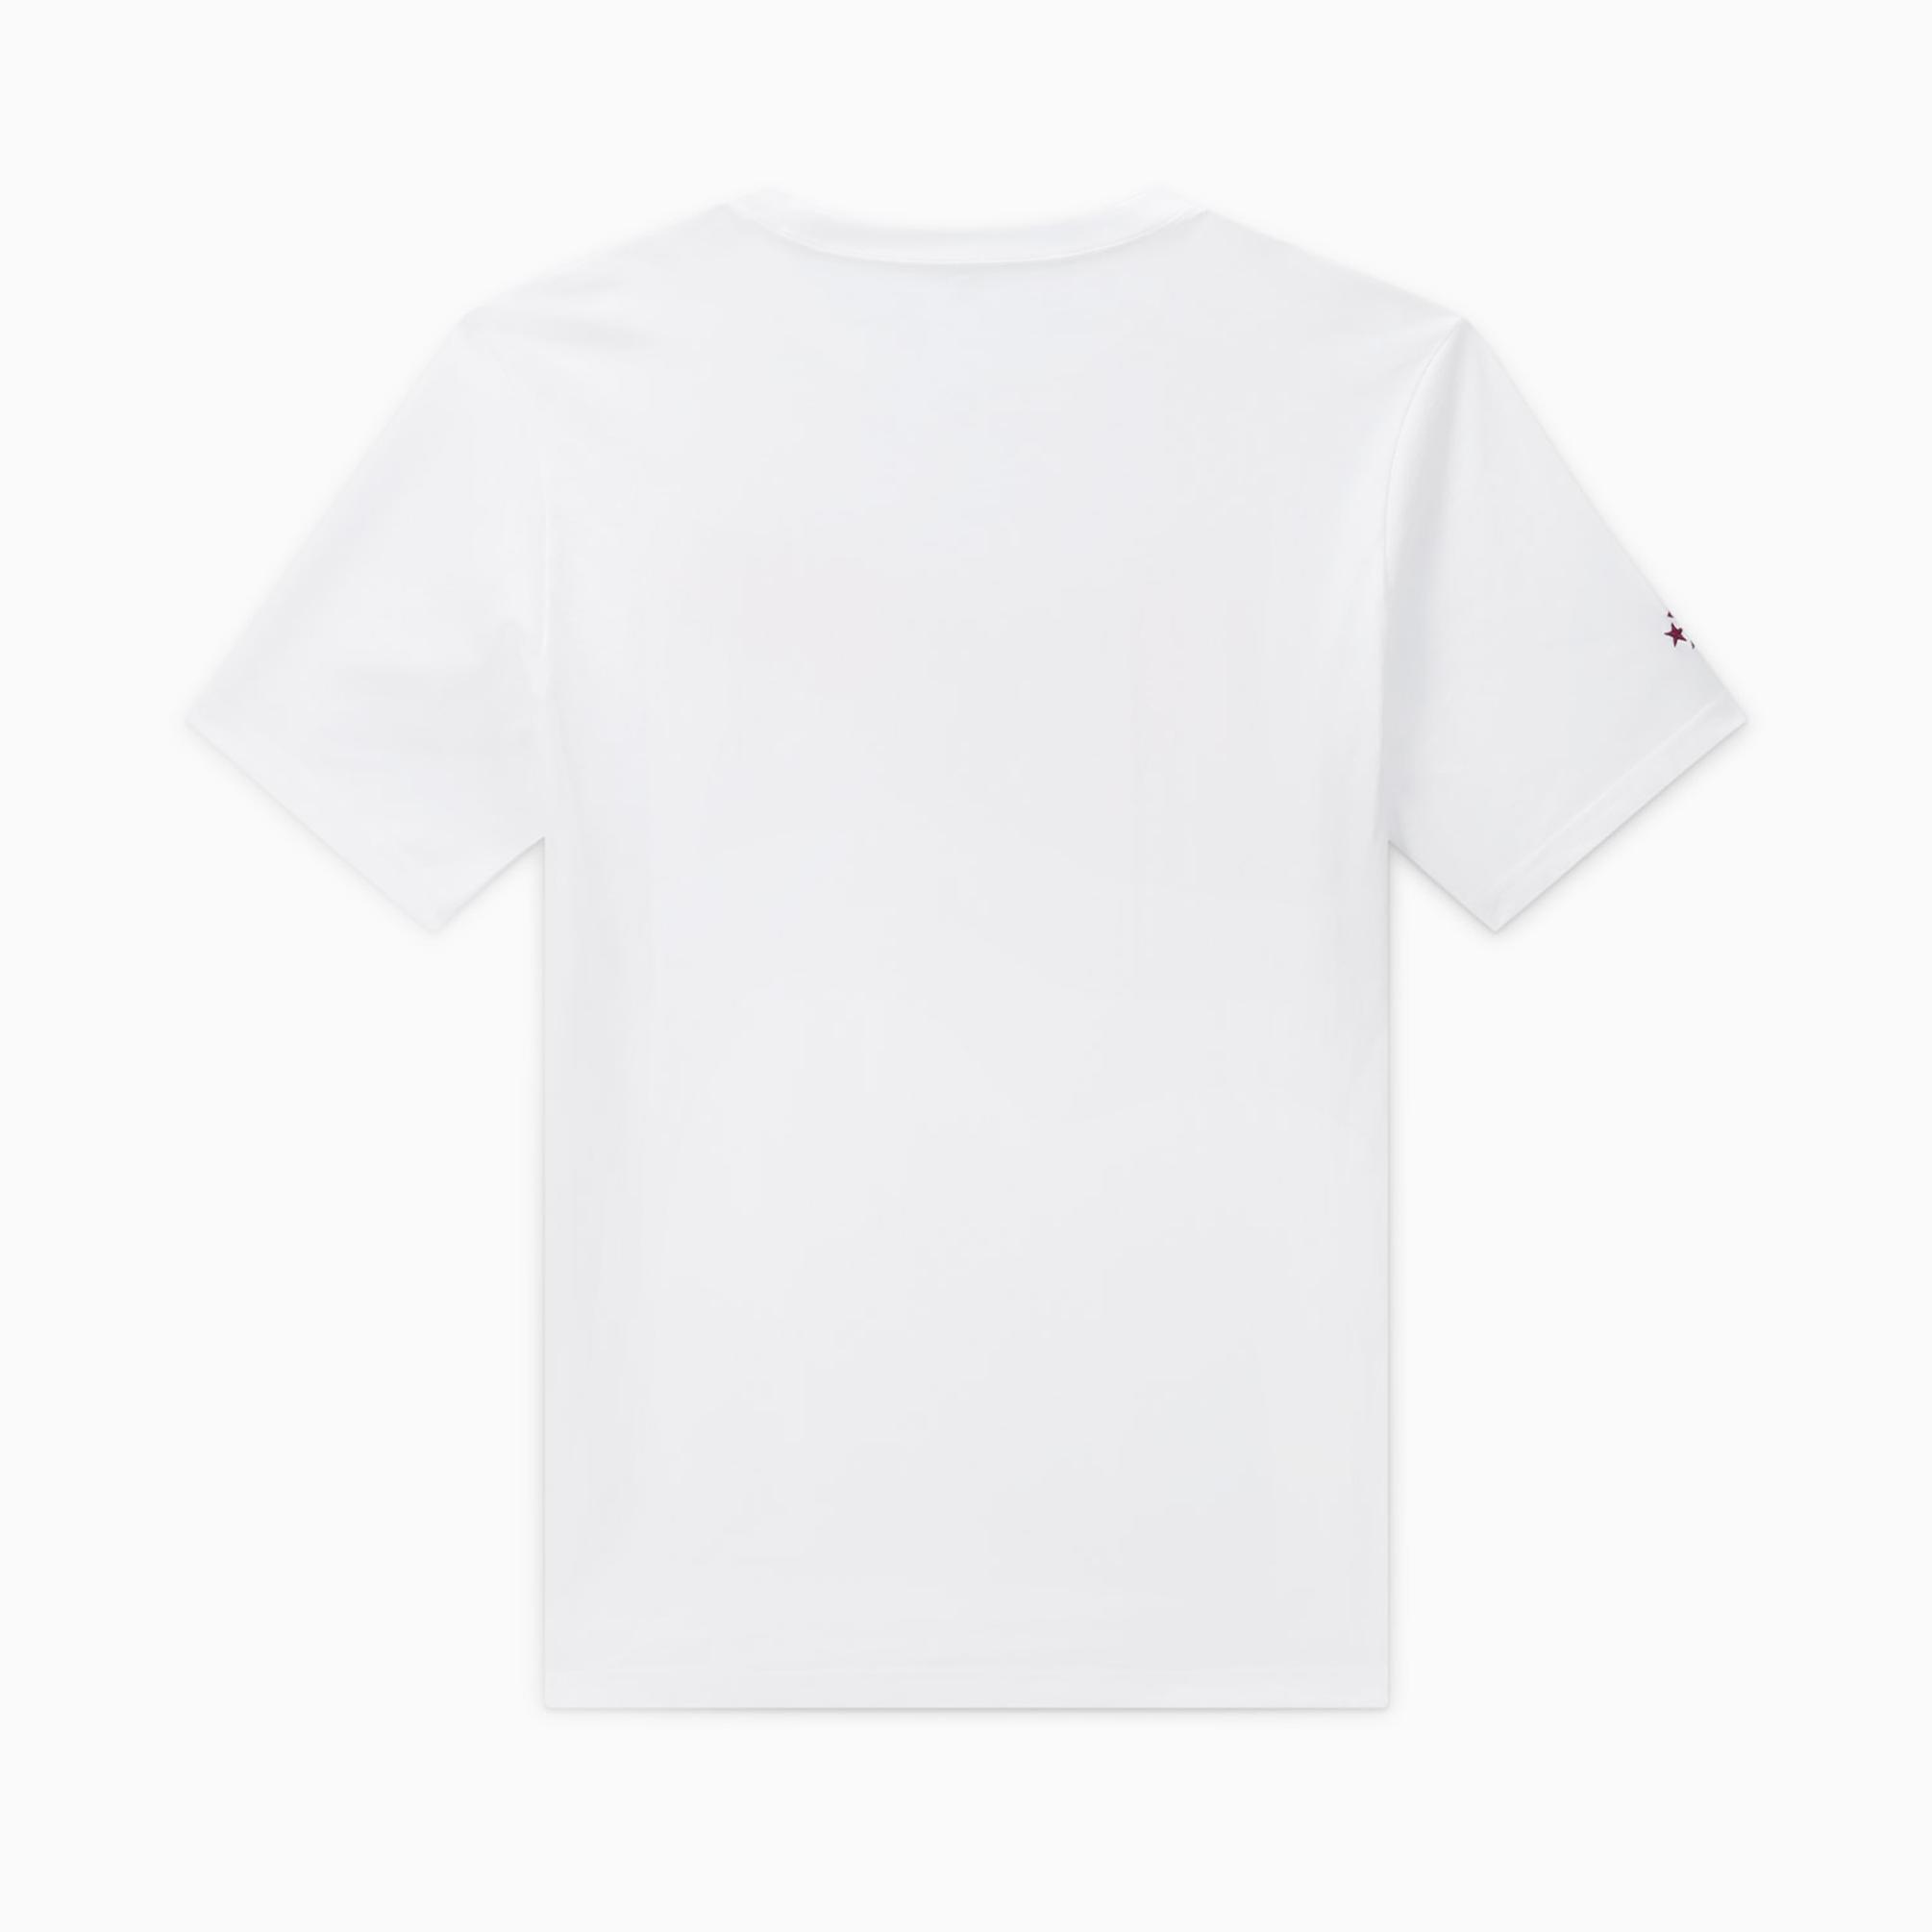  Converse Wonka Striped Unisex Beyaz T-Shirt